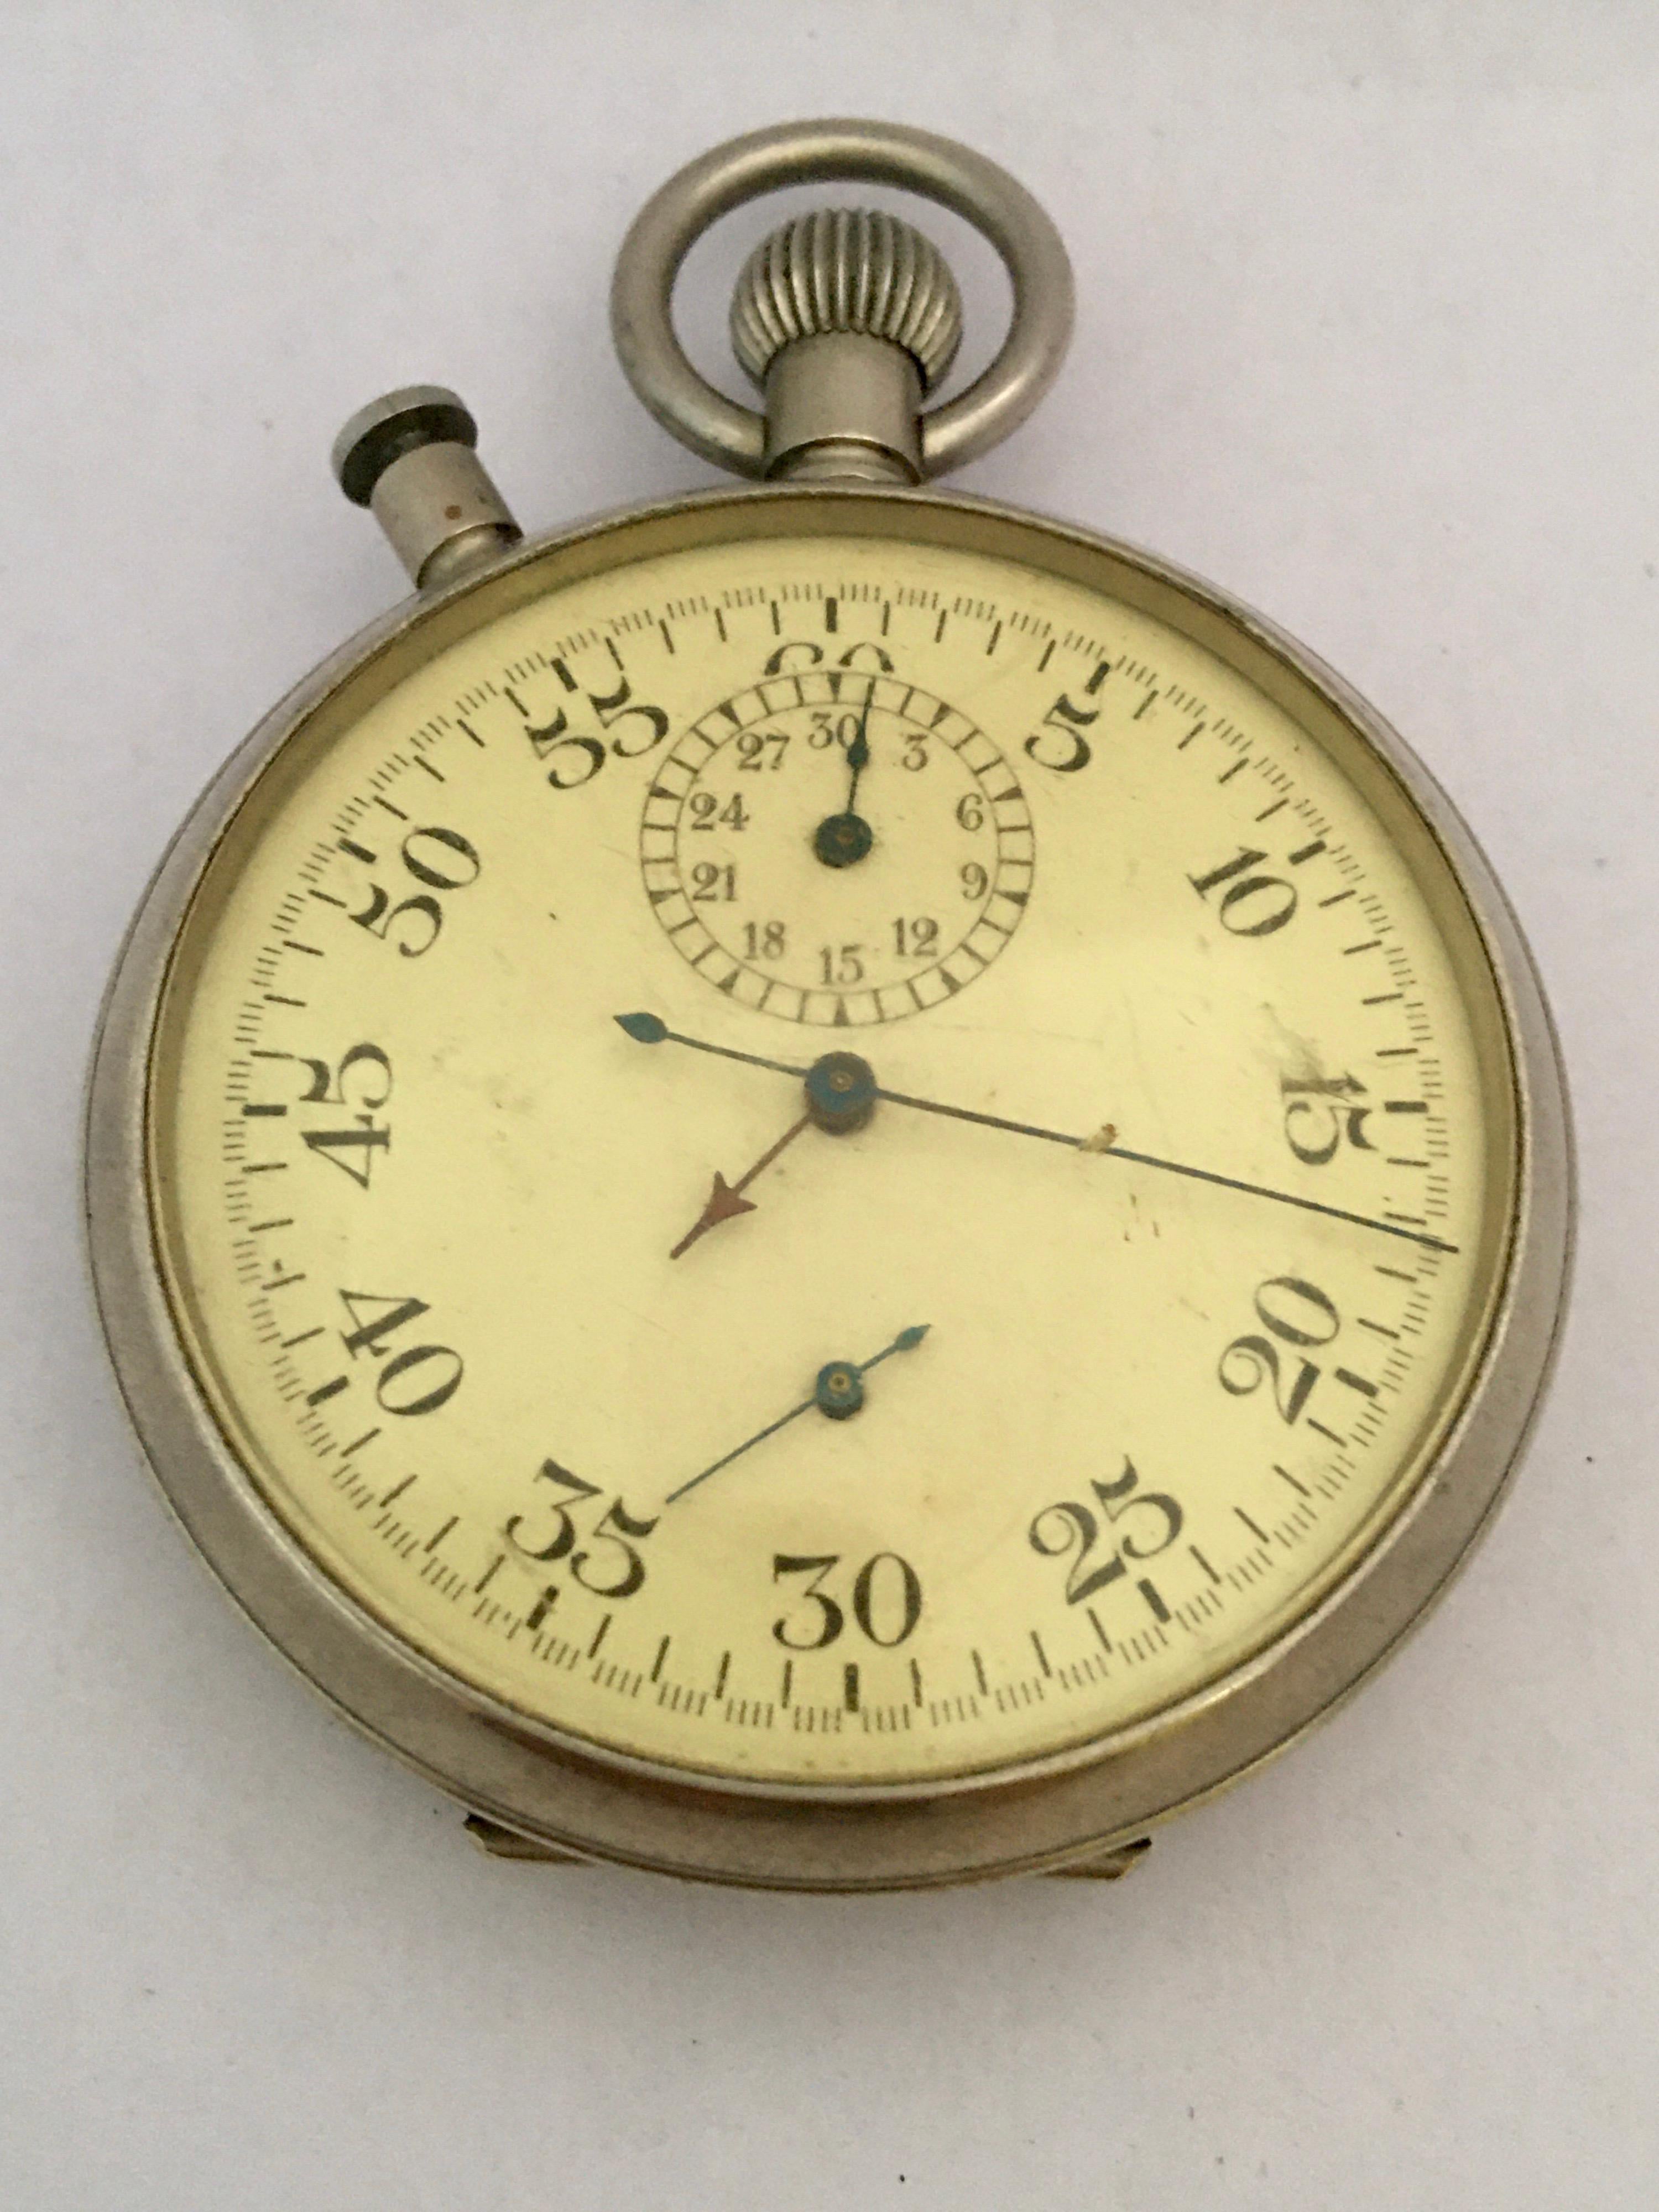 Rare 1940s Military Chronograph Stopwatch with Split-Seconds PATT. 4 No. 11643 9